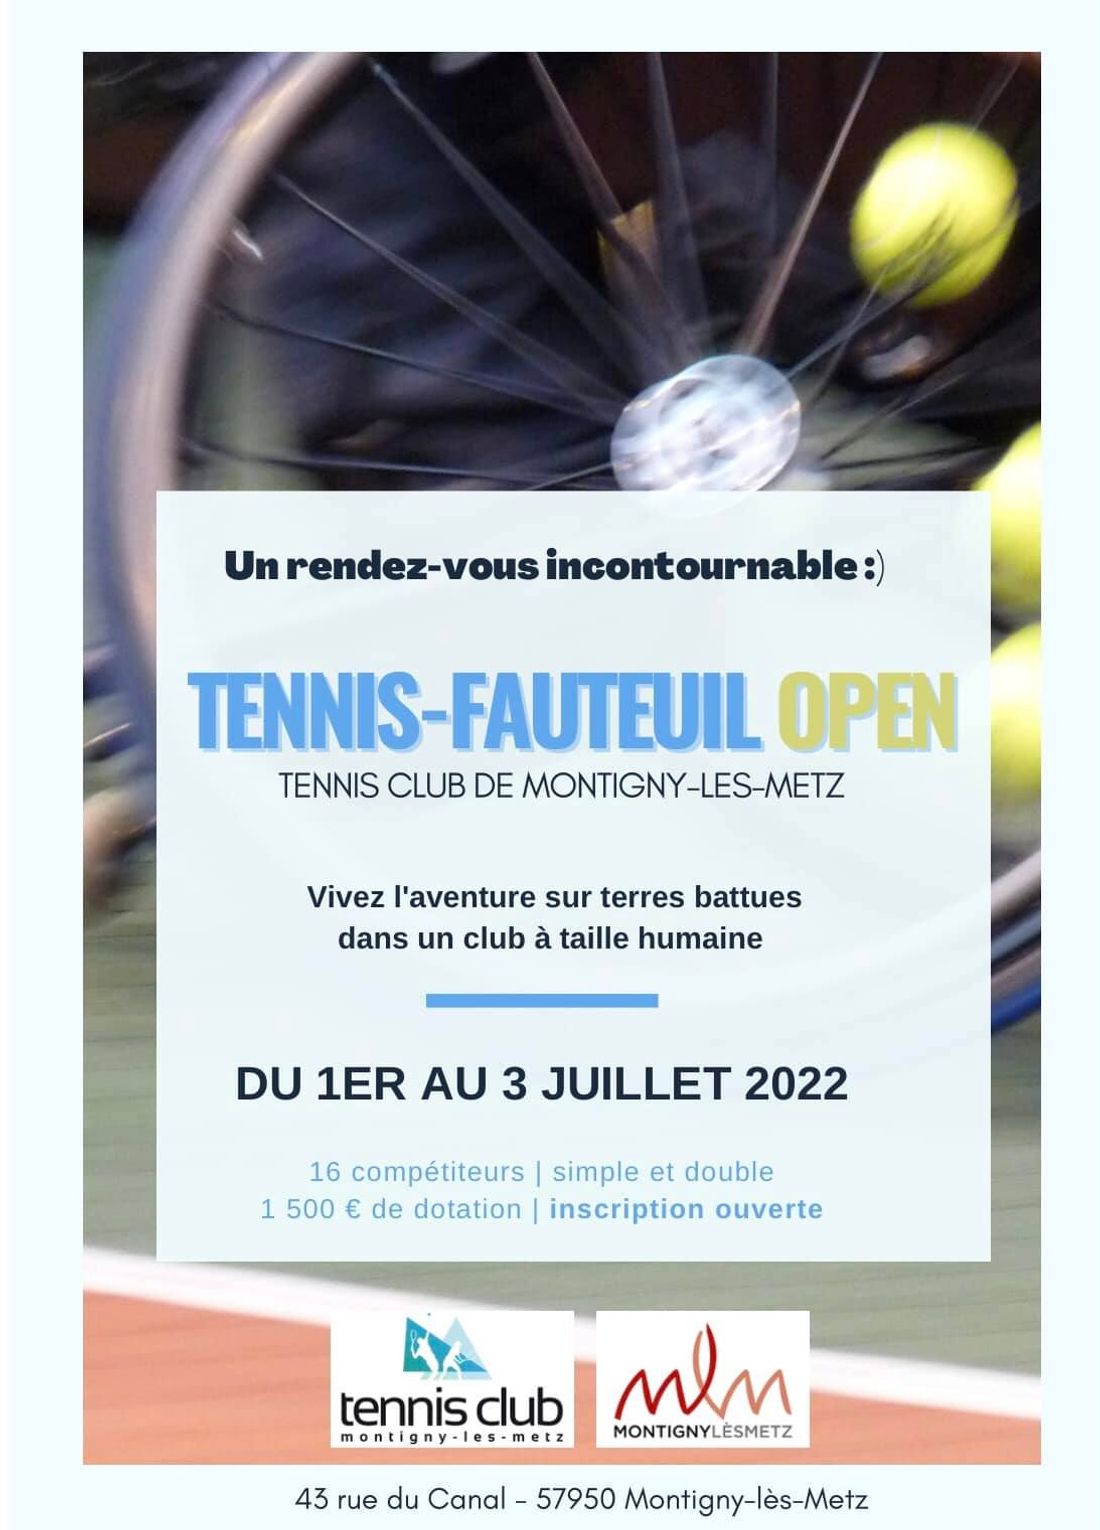 Crédit : Tennis Club de Montigny-lès-Metz